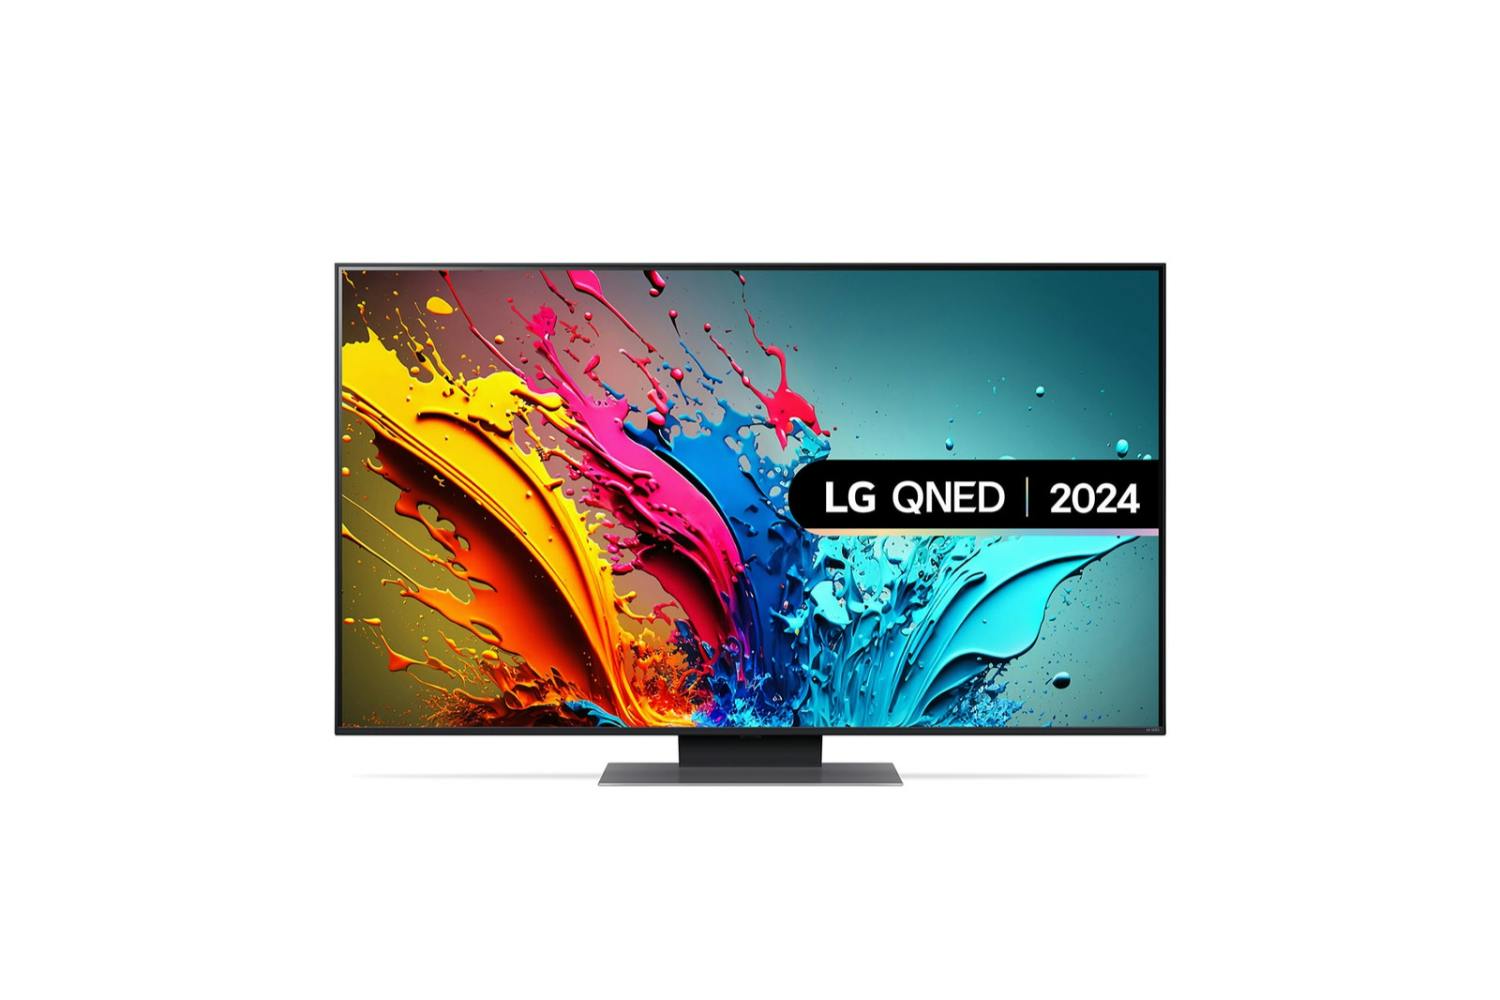 LG 55" QNED87 4K Smart TV | 55QNED87T6B.AEK